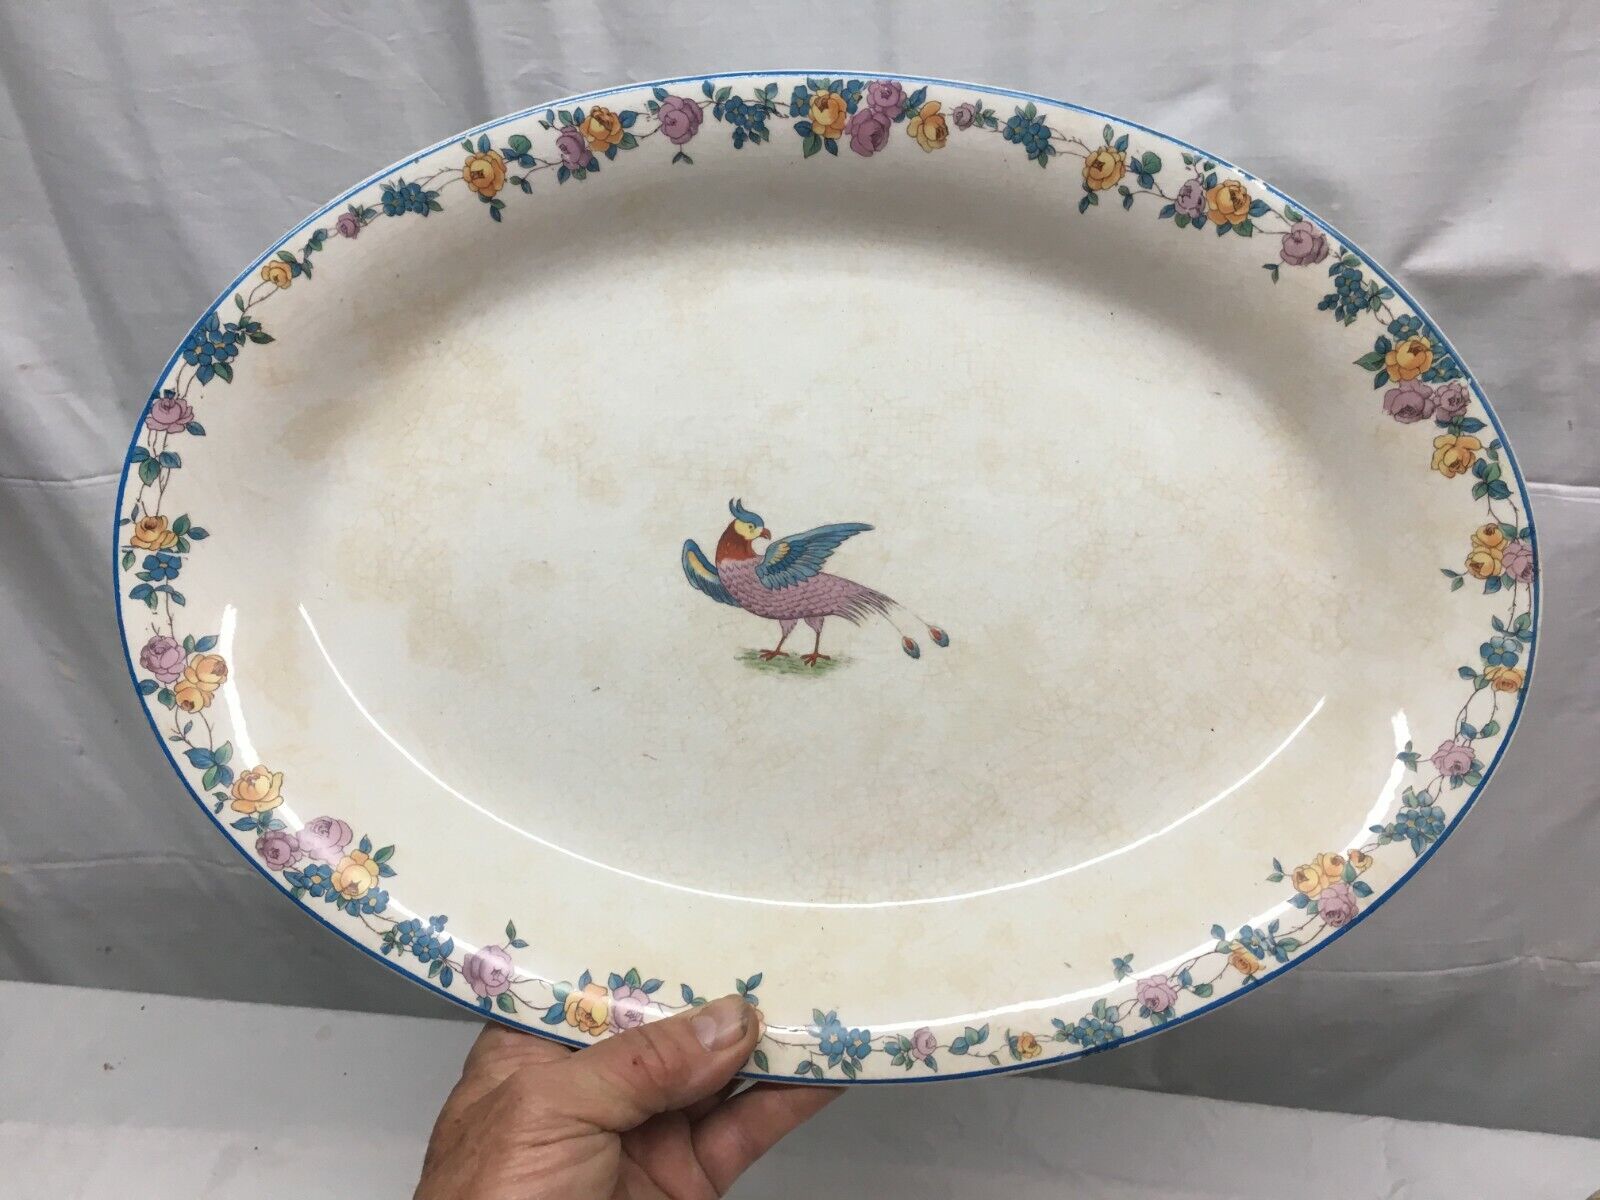 Vtg LG  Ironstone Pottery Serving Turkey Platter With Bird of Paradise 15.5”x11”